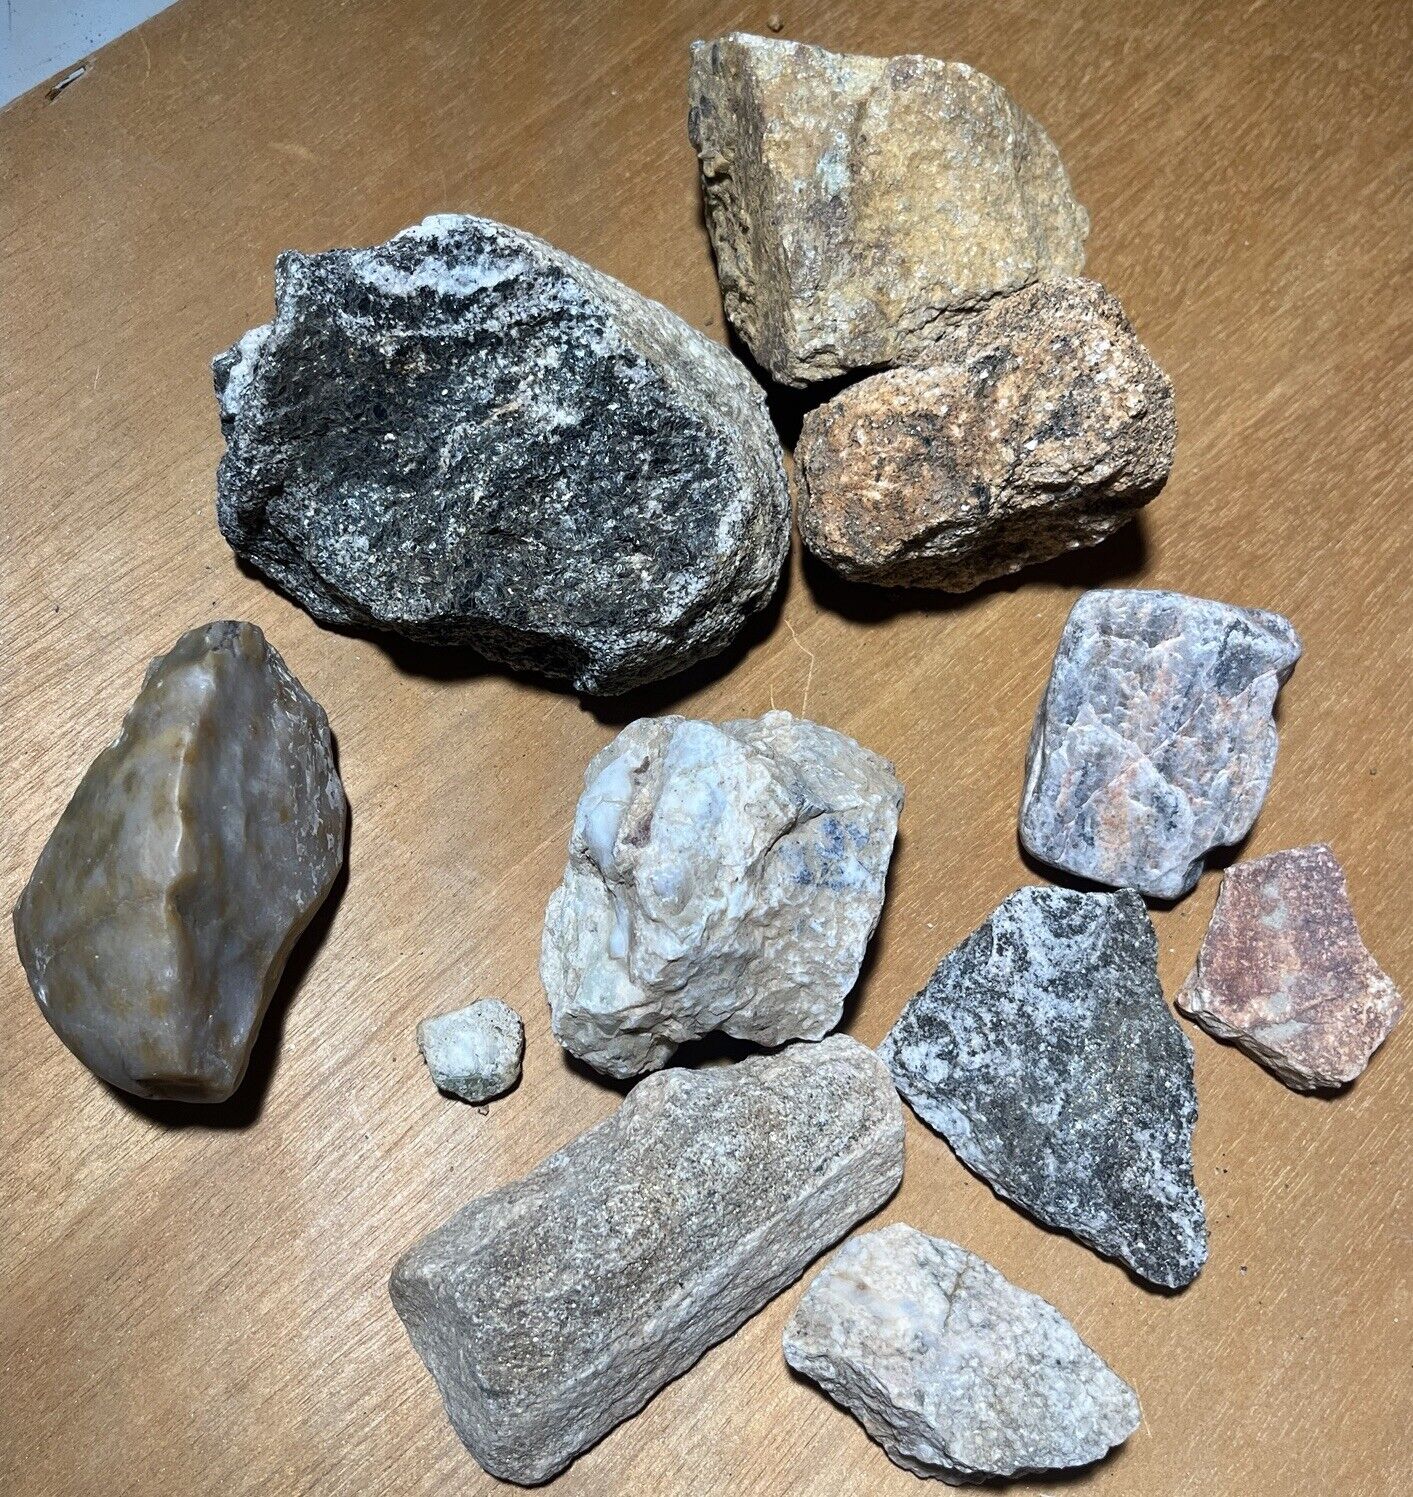 4 Lbs Of Mineralized Rock Specimens San Gorgonio,San Jacinto Mtns Possibly PMs